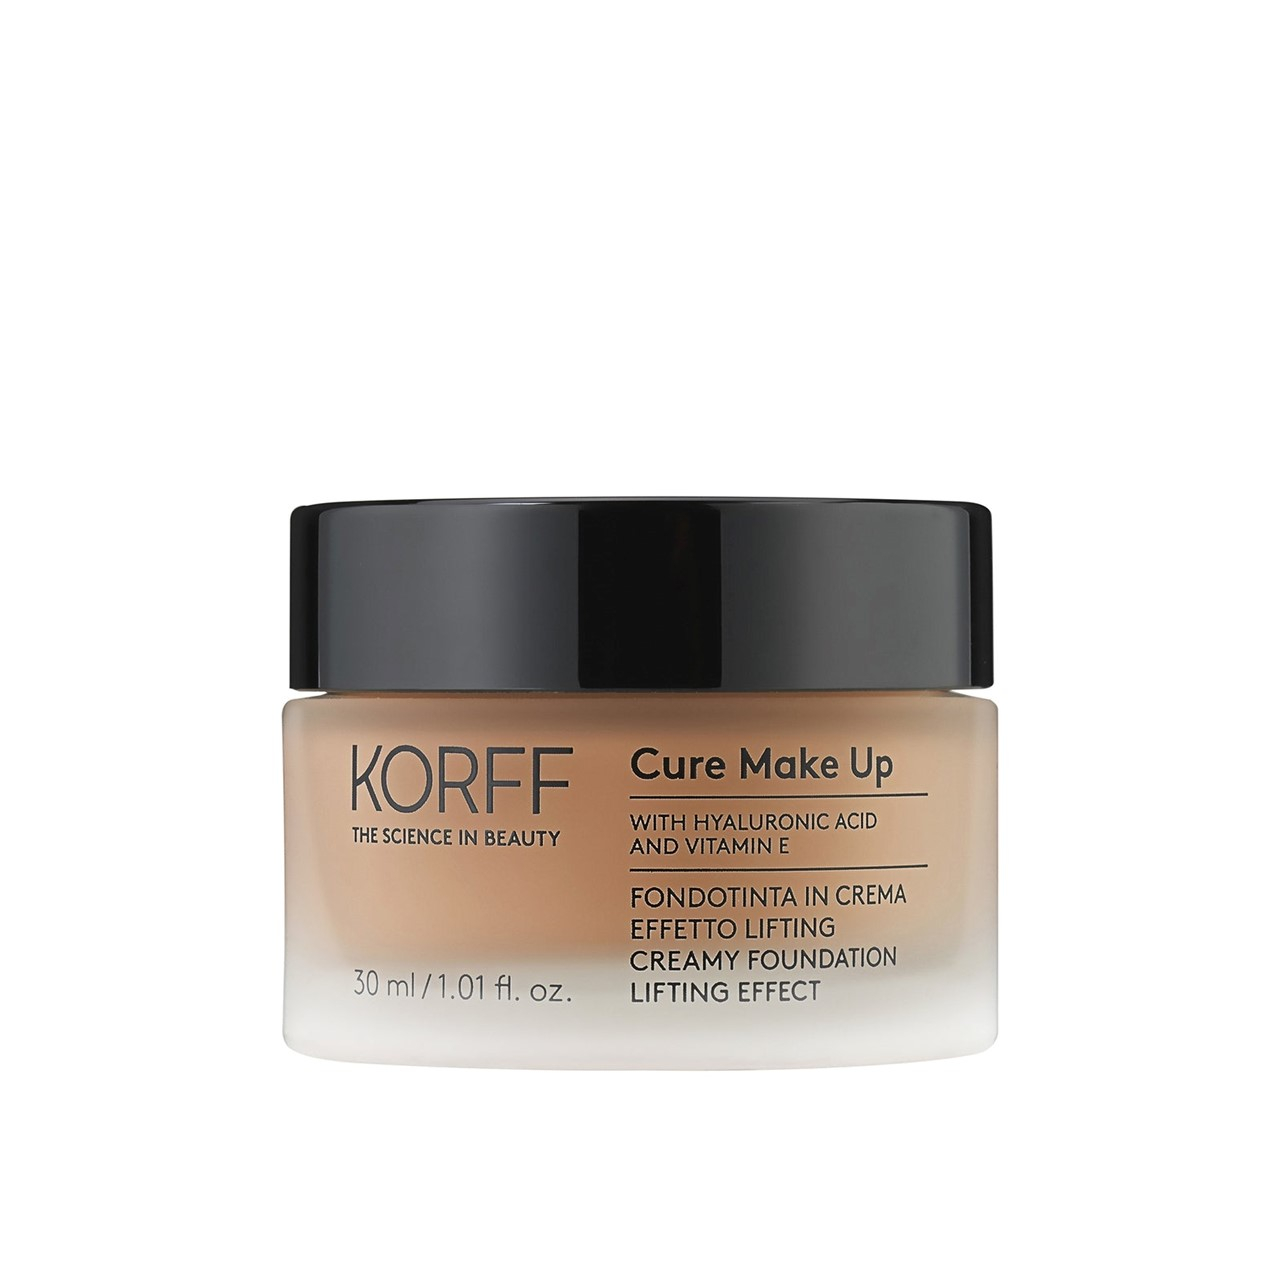 Korff Cure Make-Up Creamy Foundation Lifting Effect 06 30ml